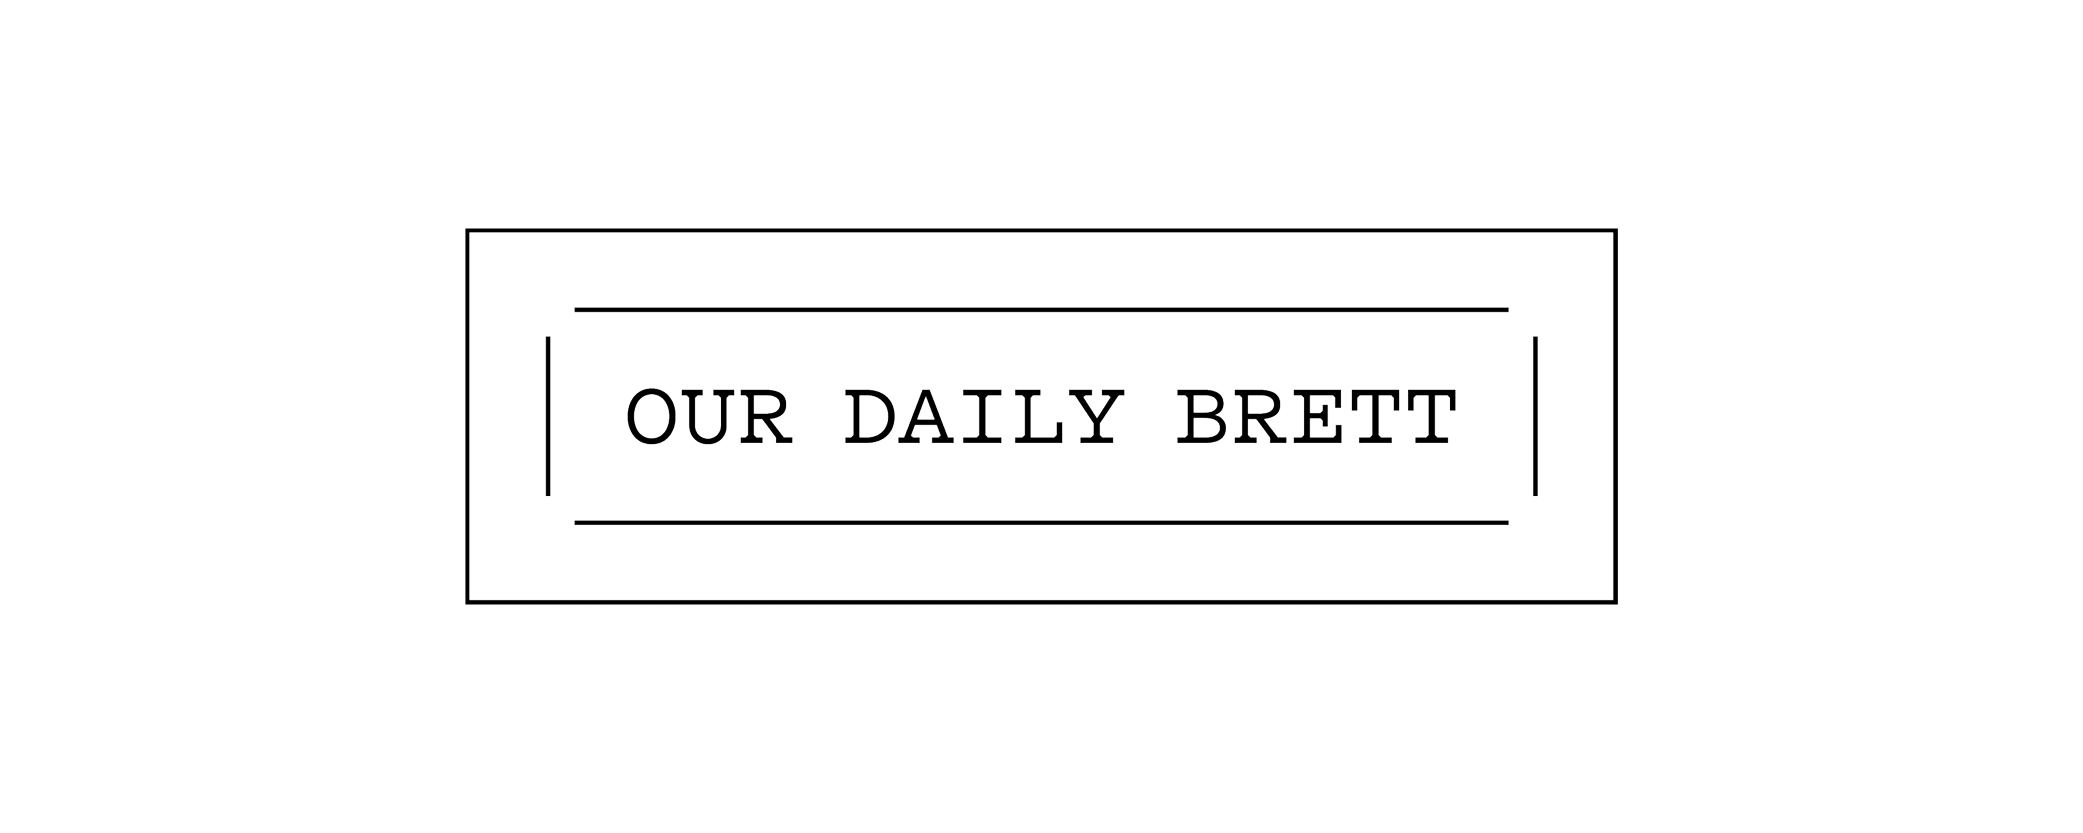 our daily brett.jpg